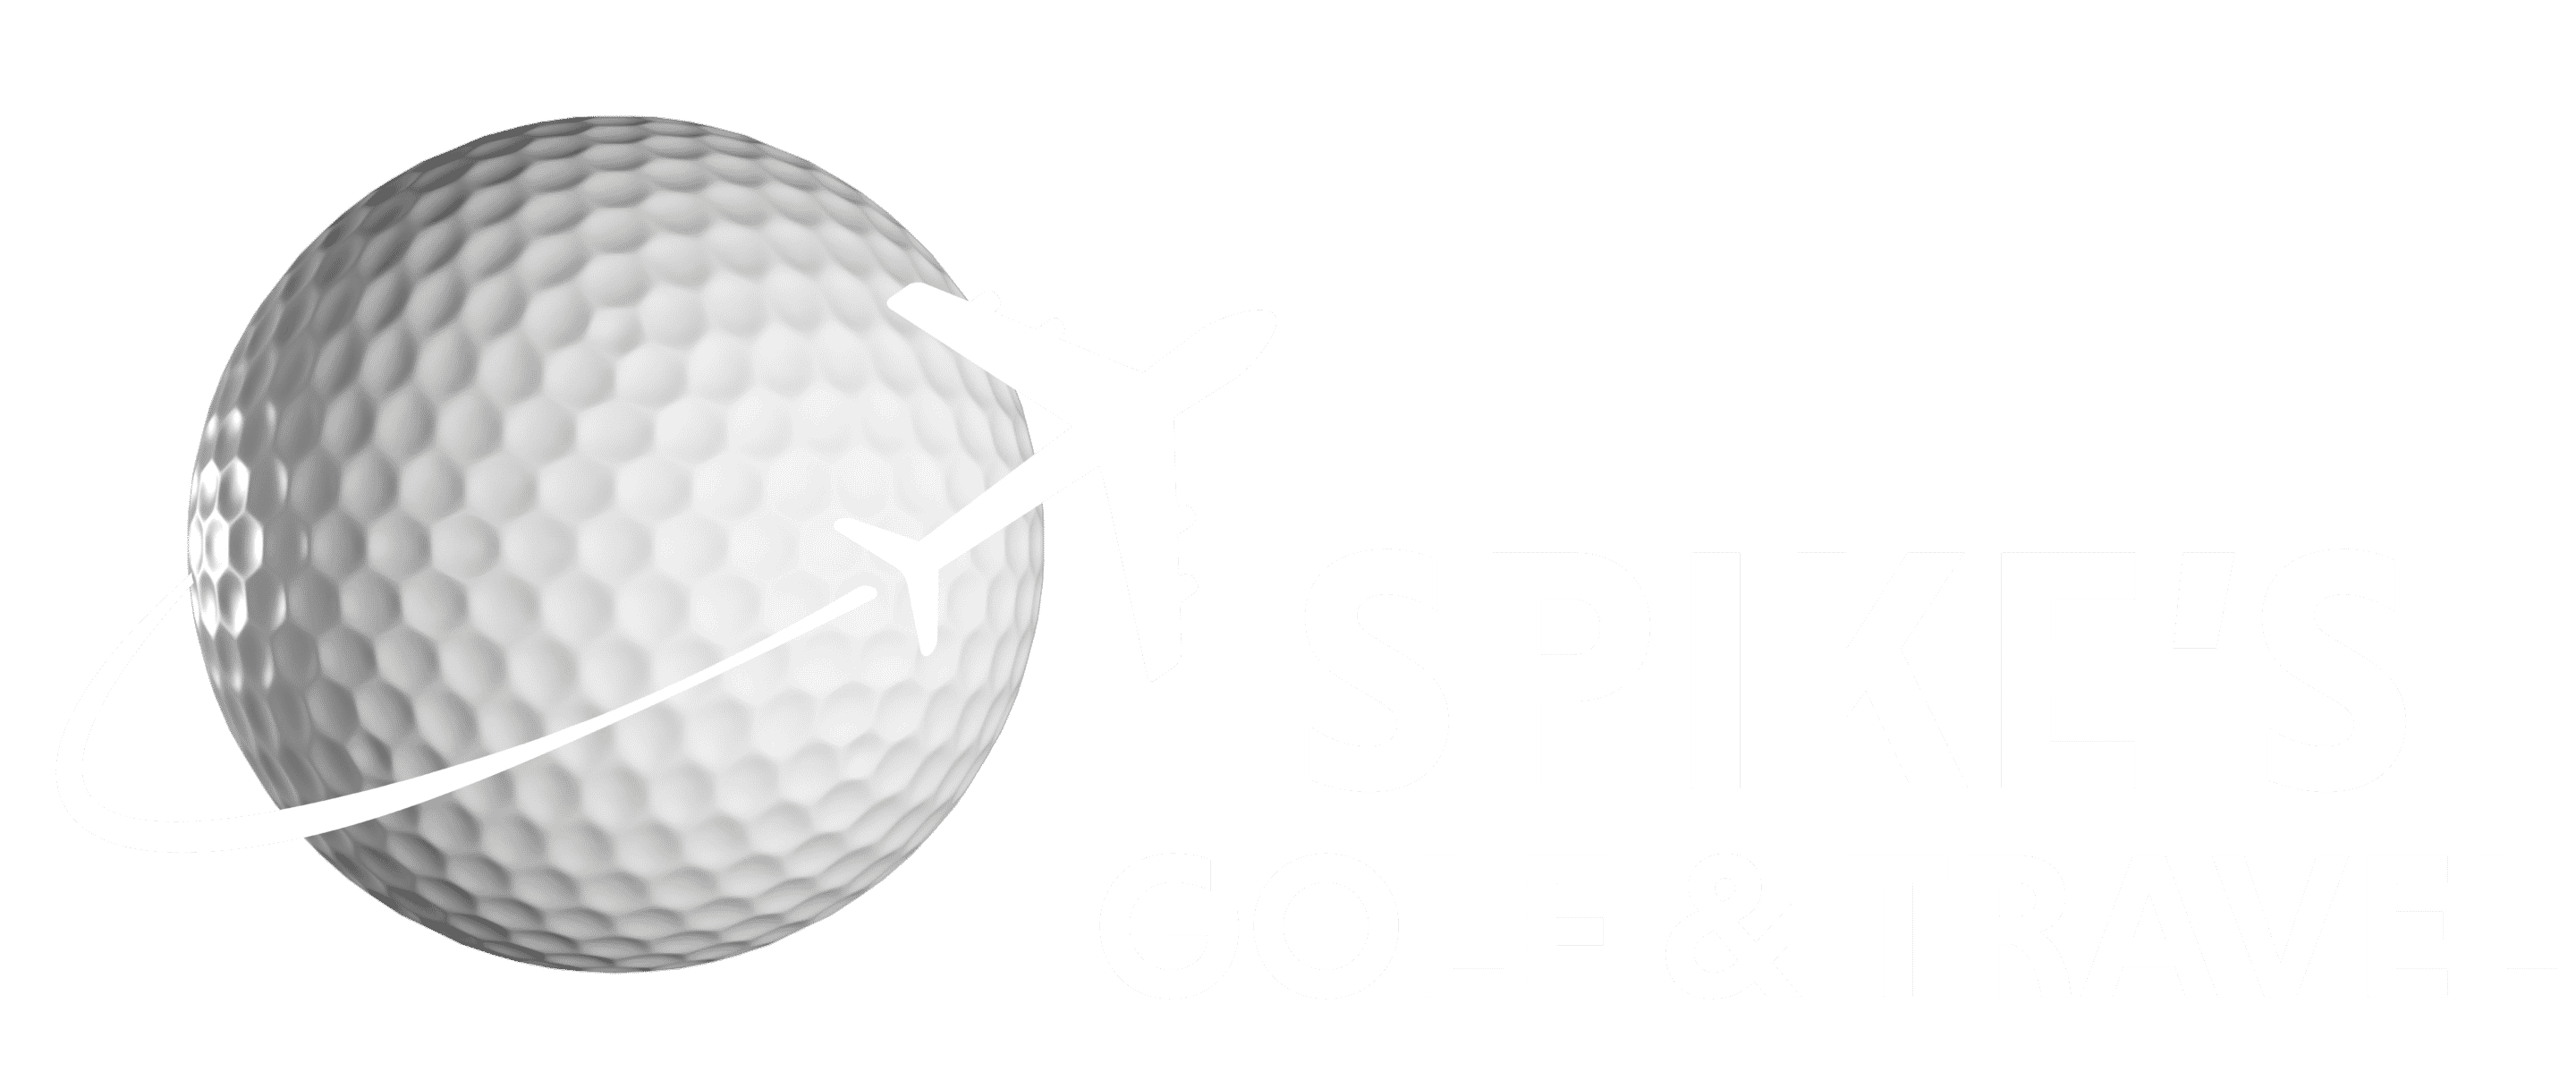 Spike's Golf & Travel